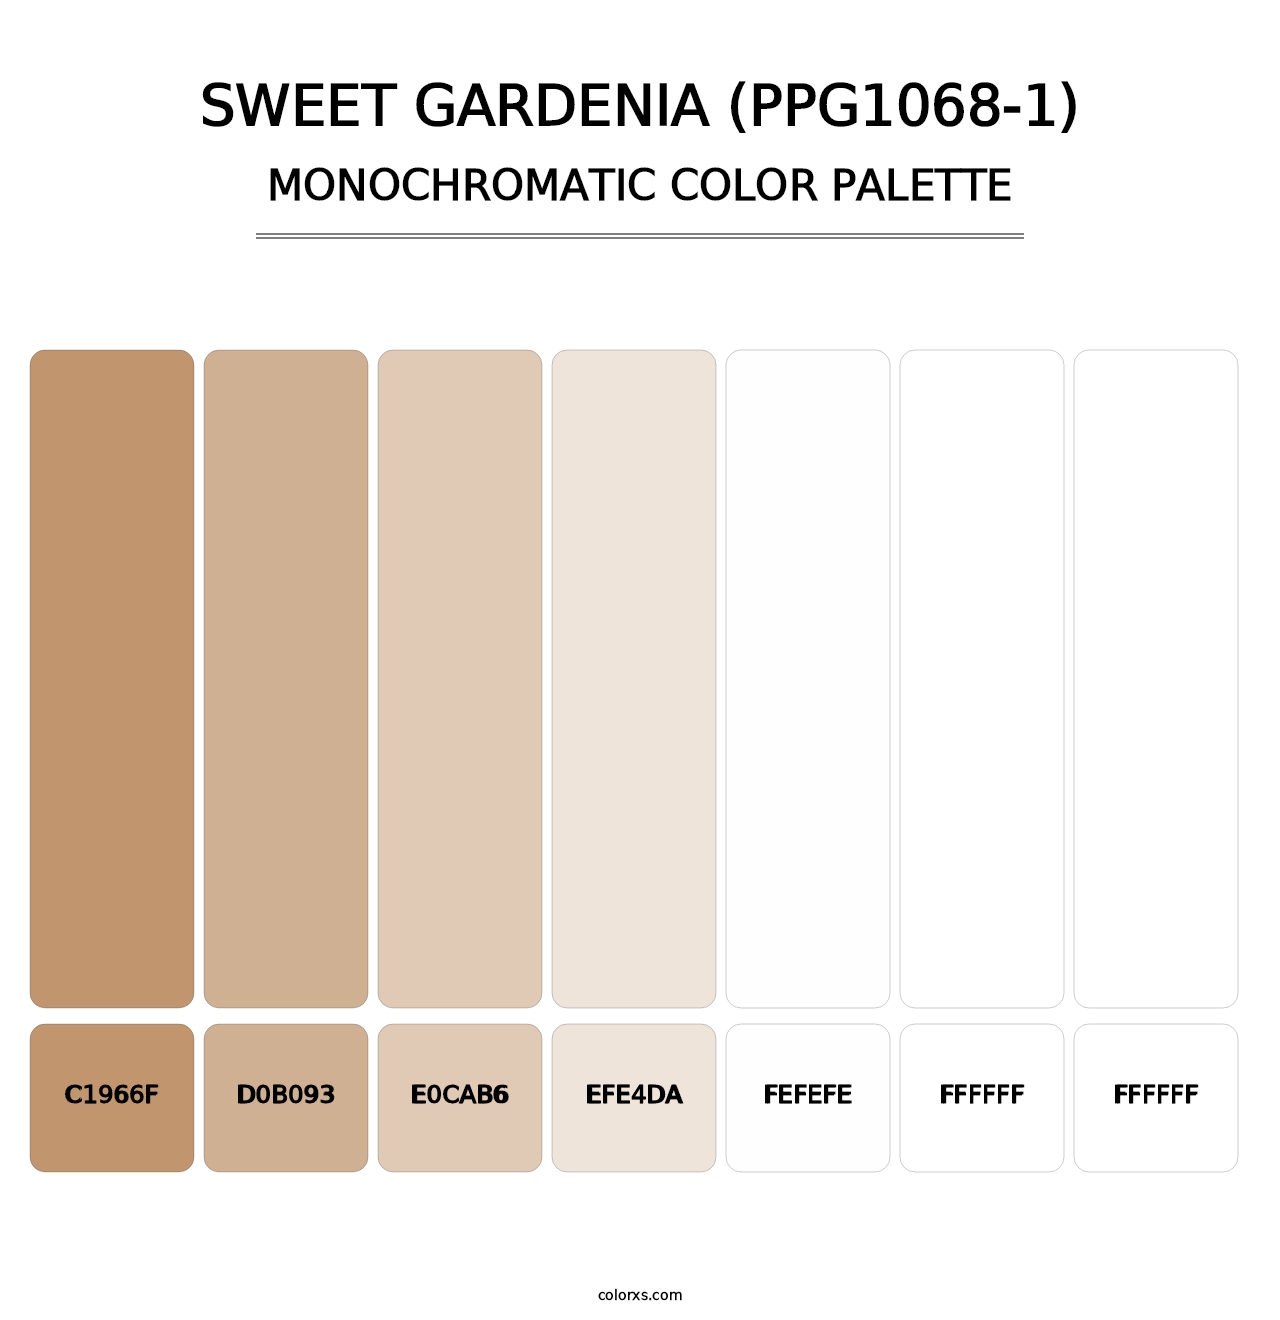 Sweet Gardenia (PPG1068-1) - Monochromatic Color Palette